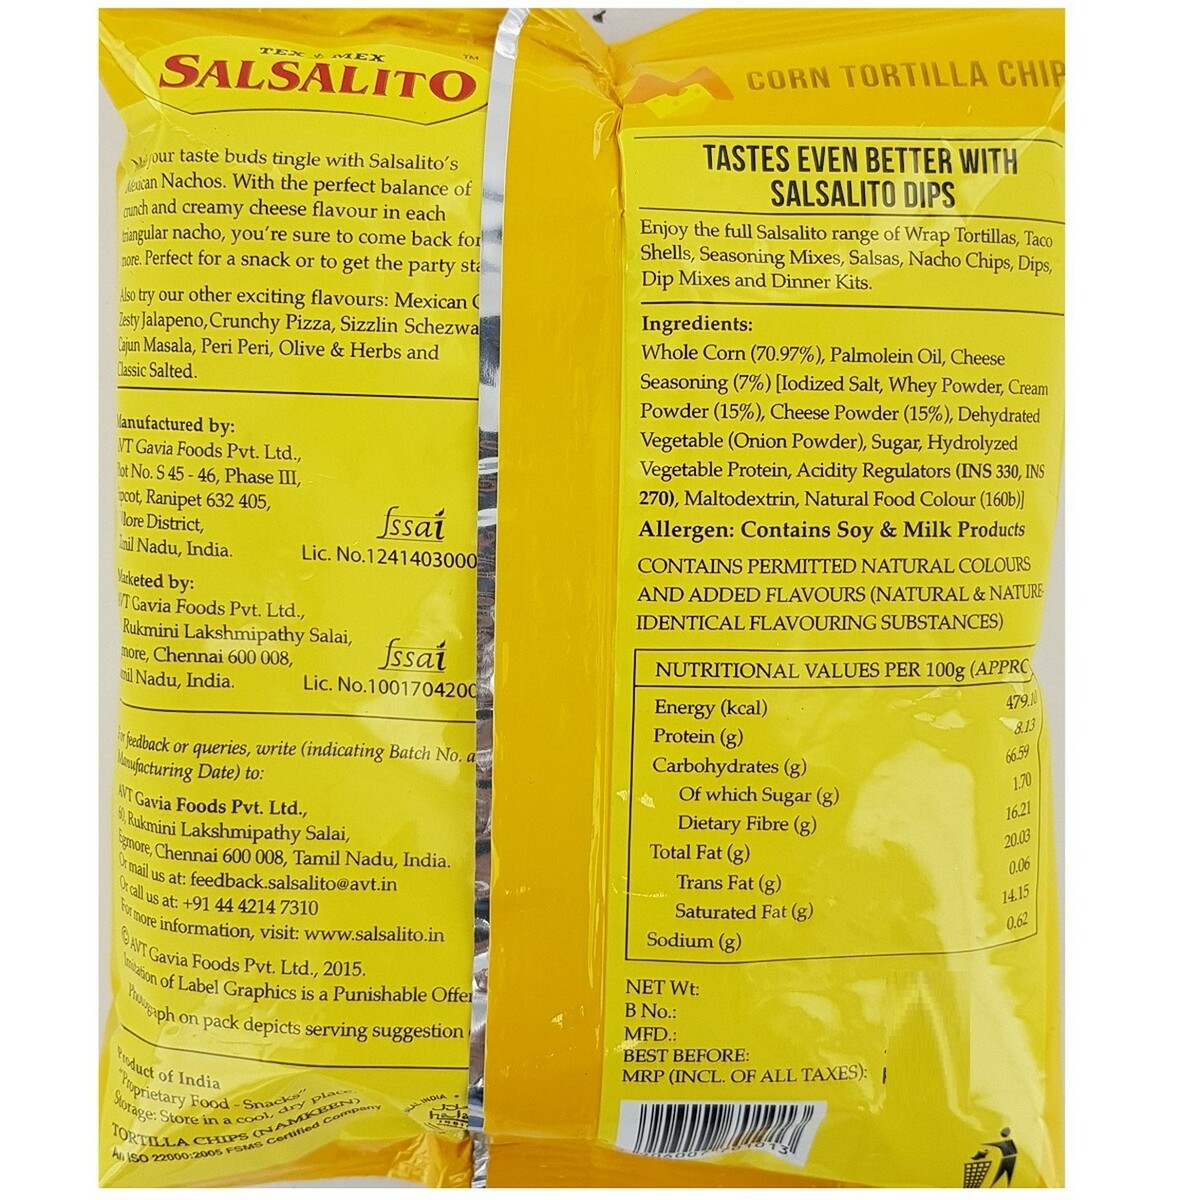 Salsalito Nacho Chips Creamy Cheese 40g